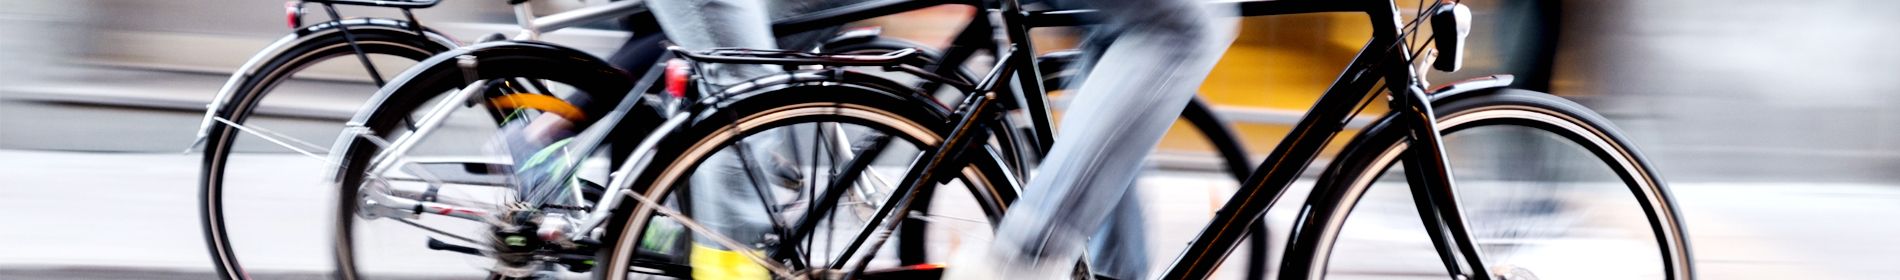 bicyclettes et vitesse